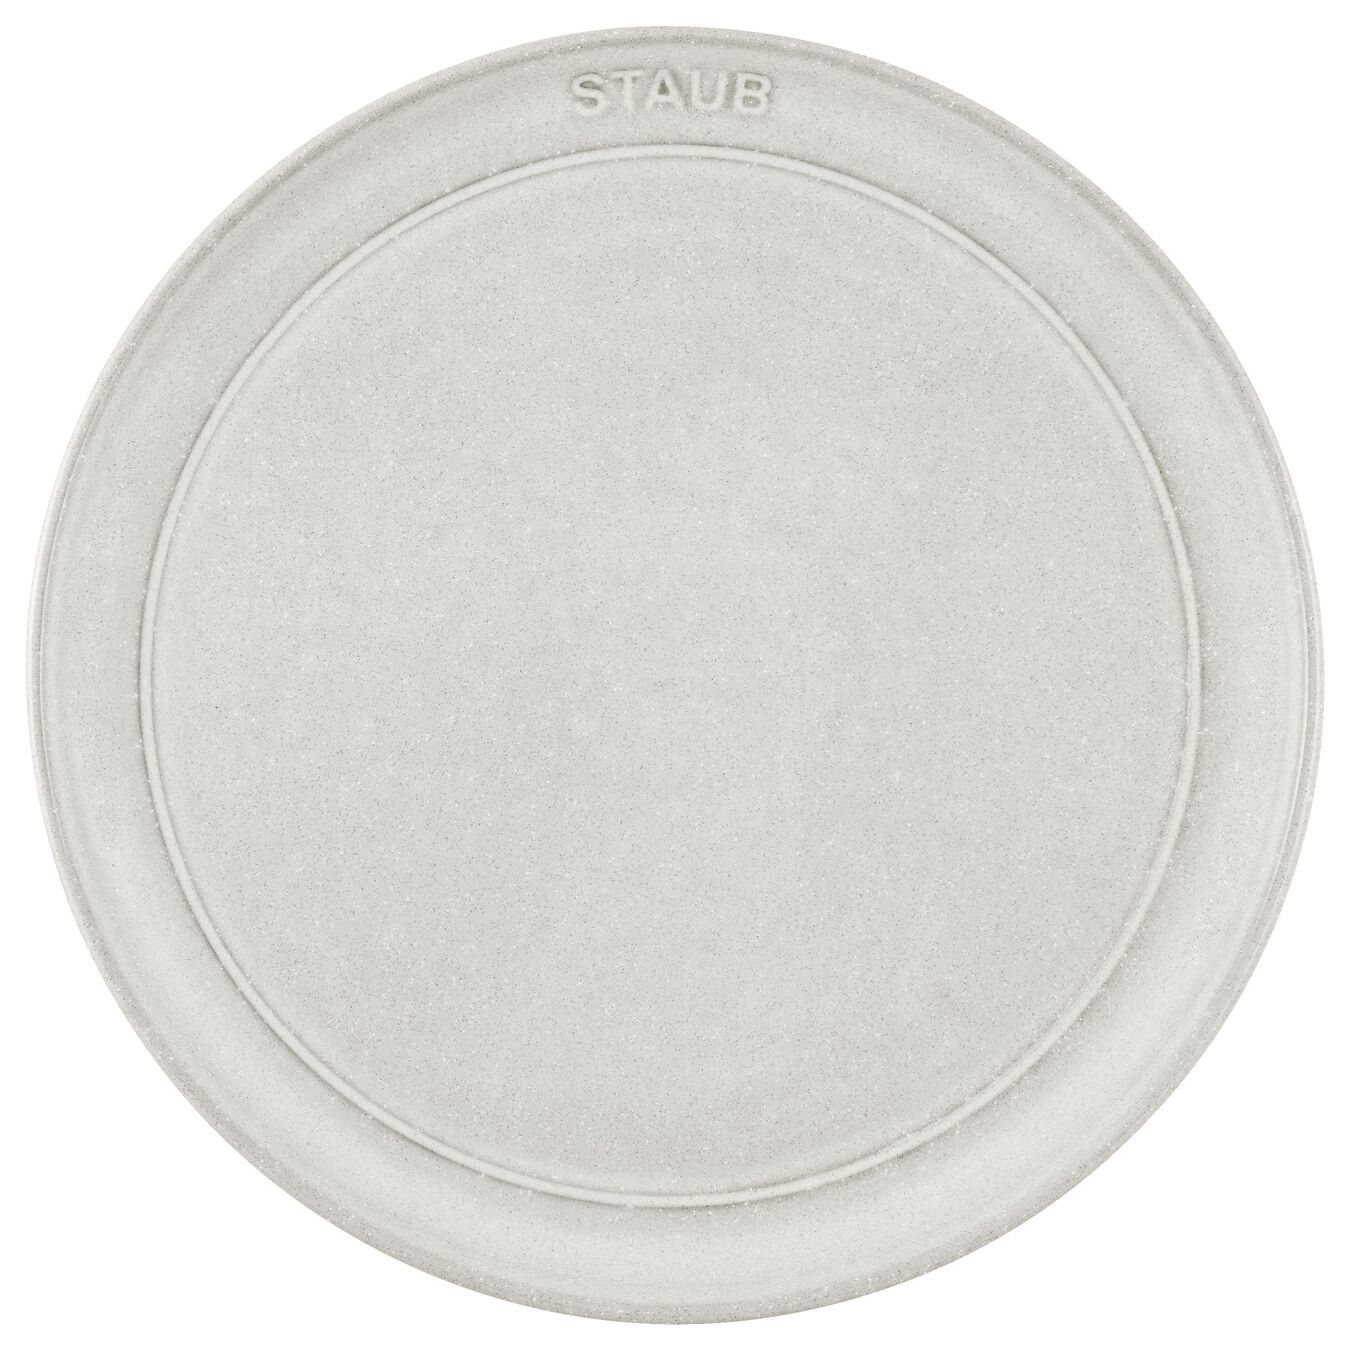 Tallrik plan 22 cm, Ceramic, White Truffle,,large 2